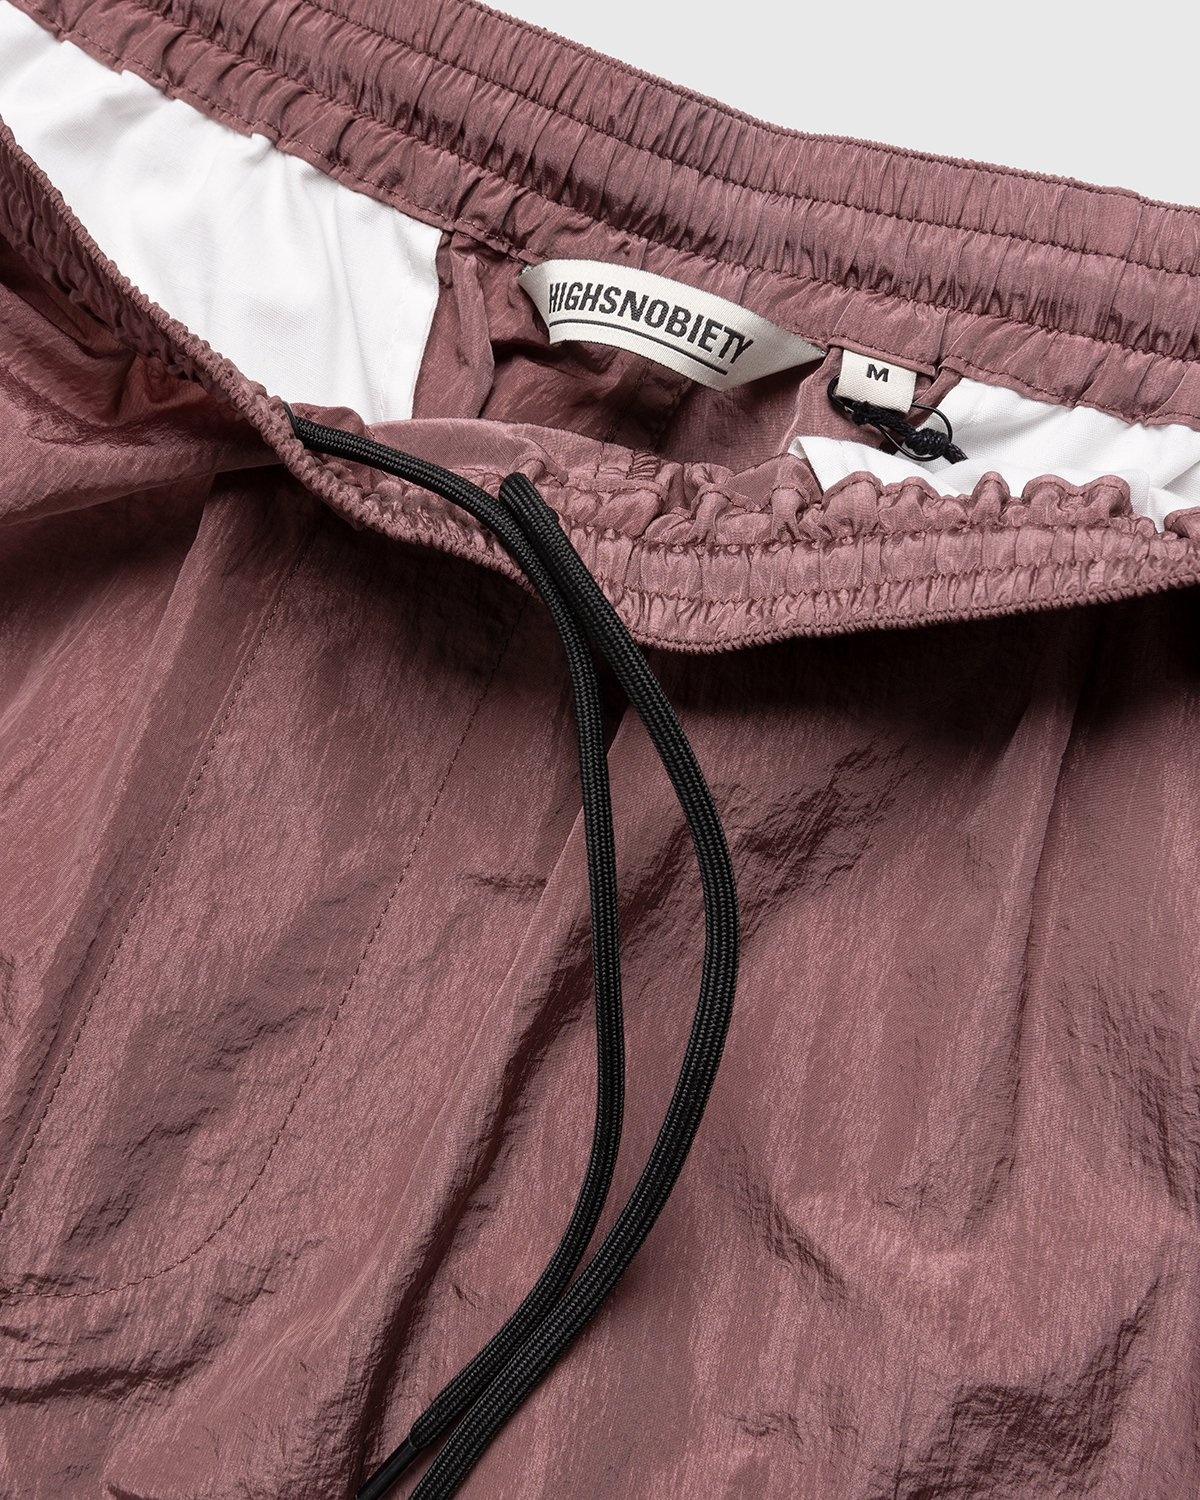 Highsnobiety – Crepe Nylon Elastic Pants Rose Gold - Active Pants - Pink - Image 5